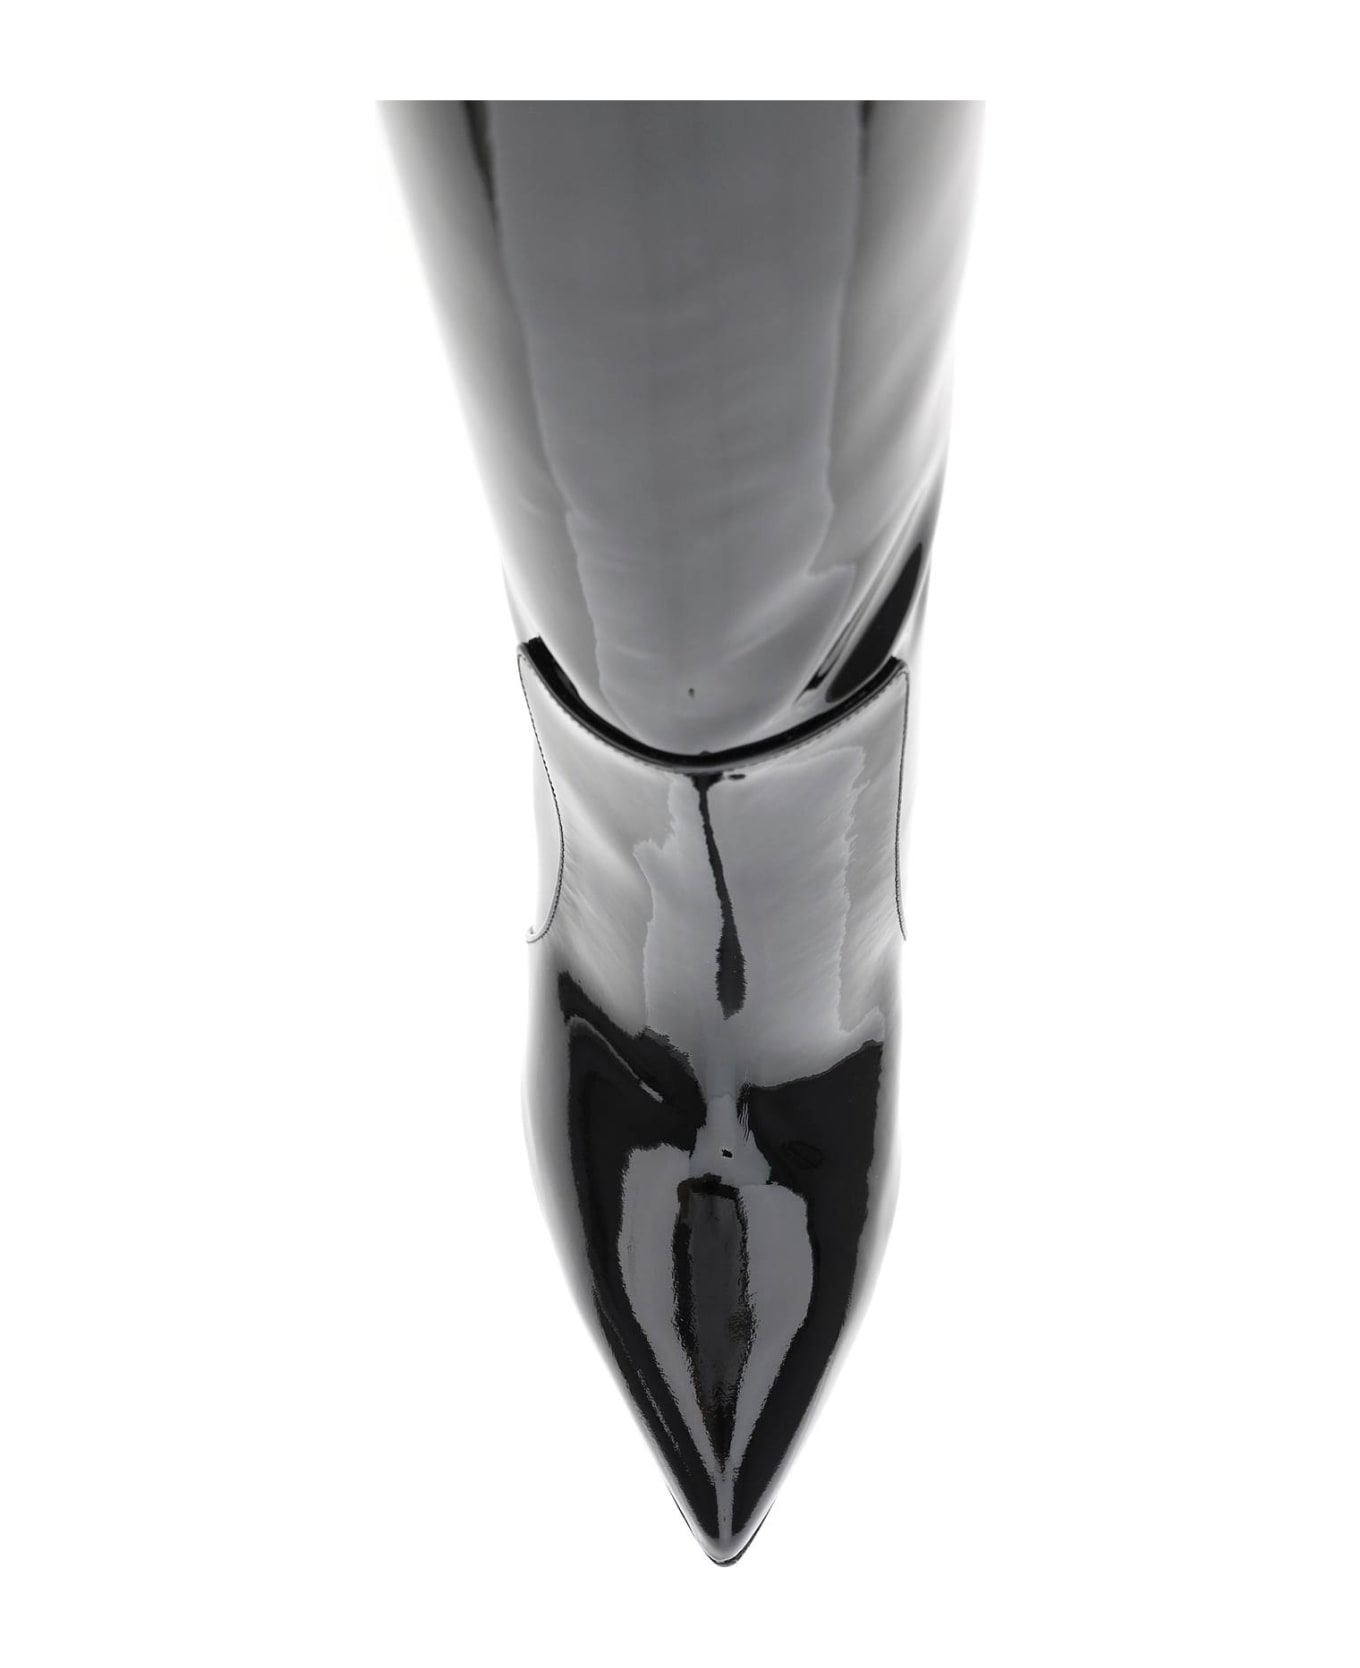 Paris Texas Patent Leather Stiletto Boots - Black ブーツ